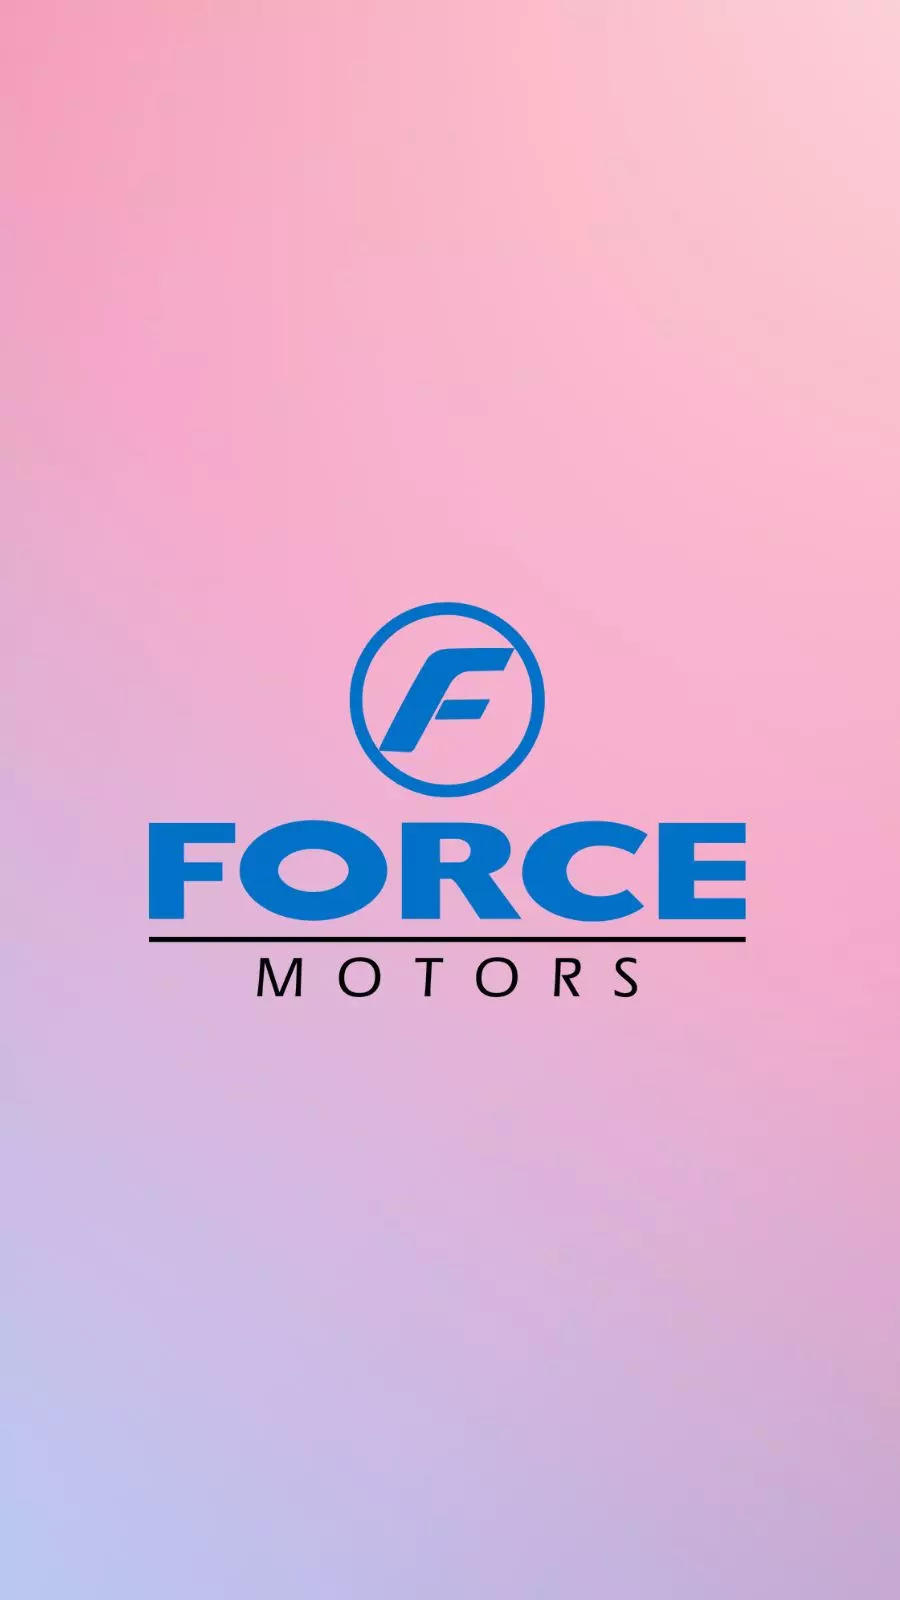 Kling Cars- Force Motors - YouTube